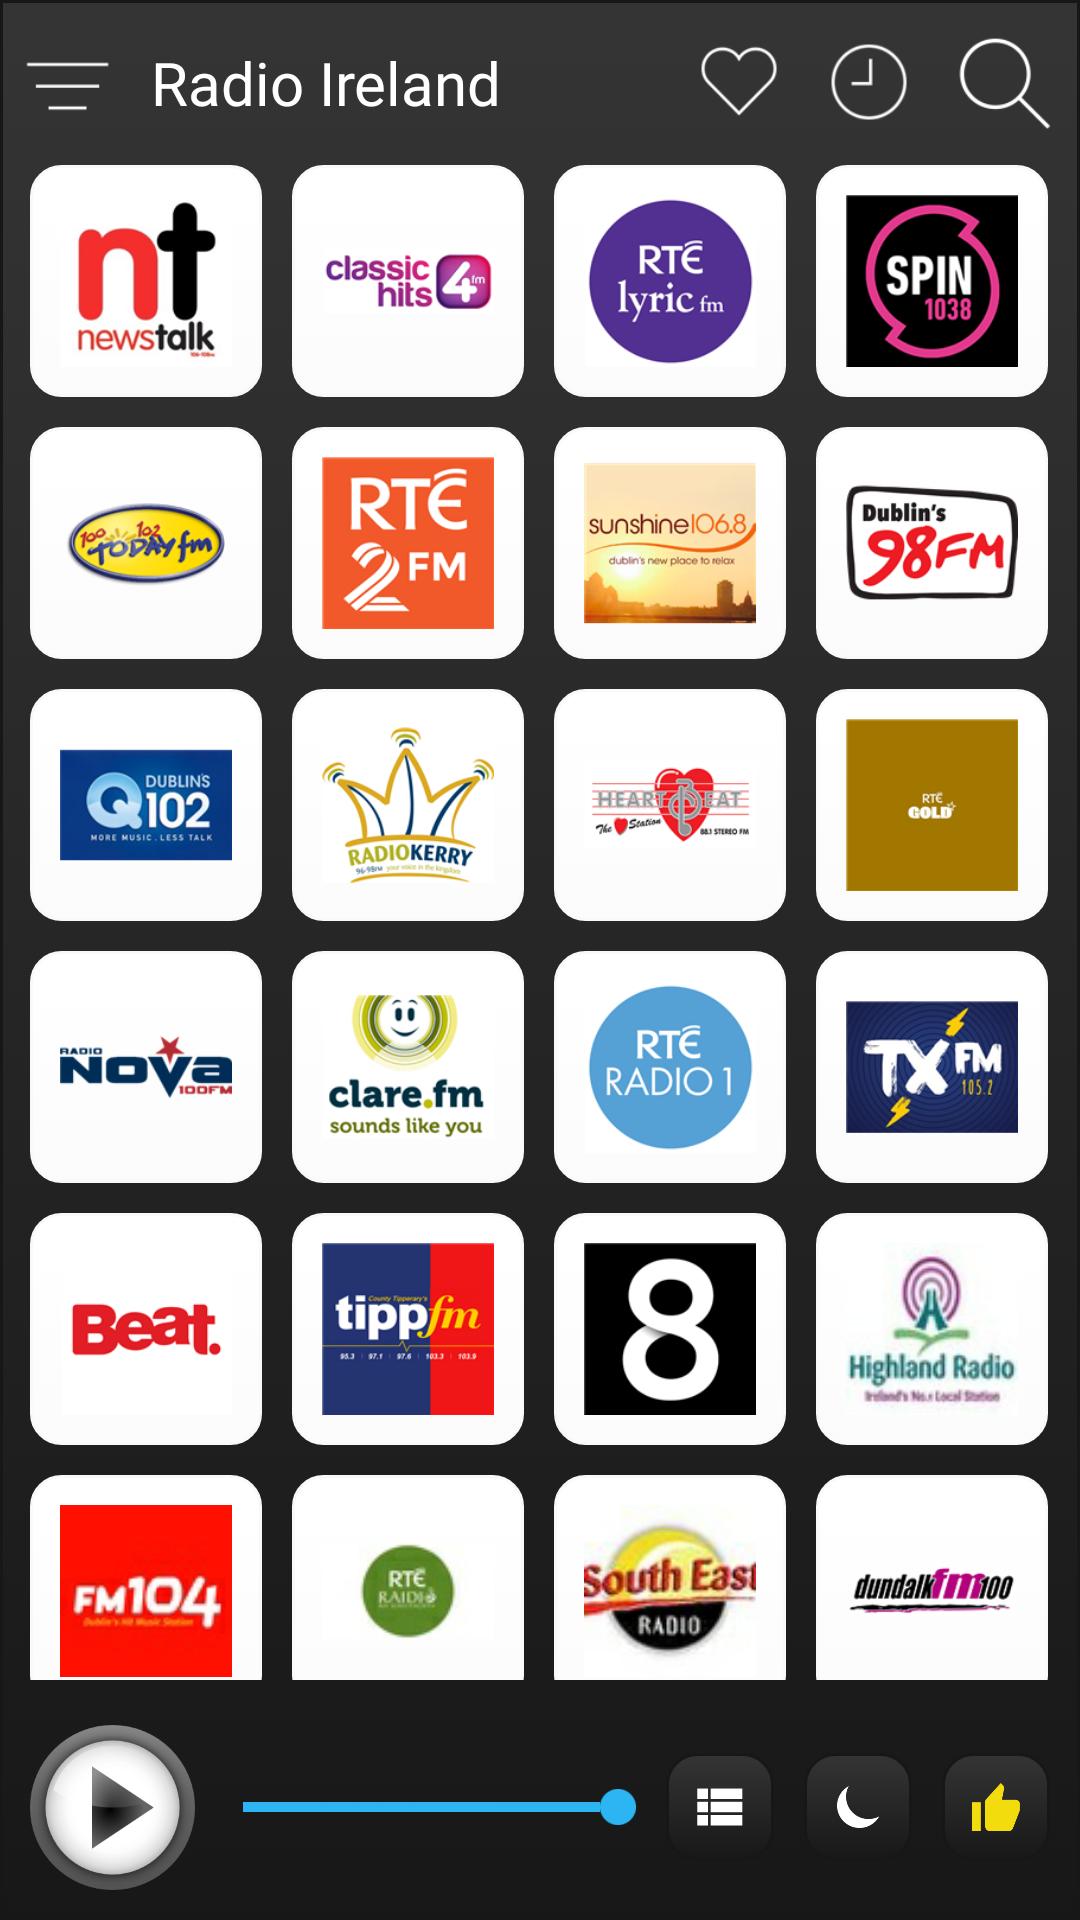 Ireland Radio Stations Online - Irish FM AM Music for Android - APK Download